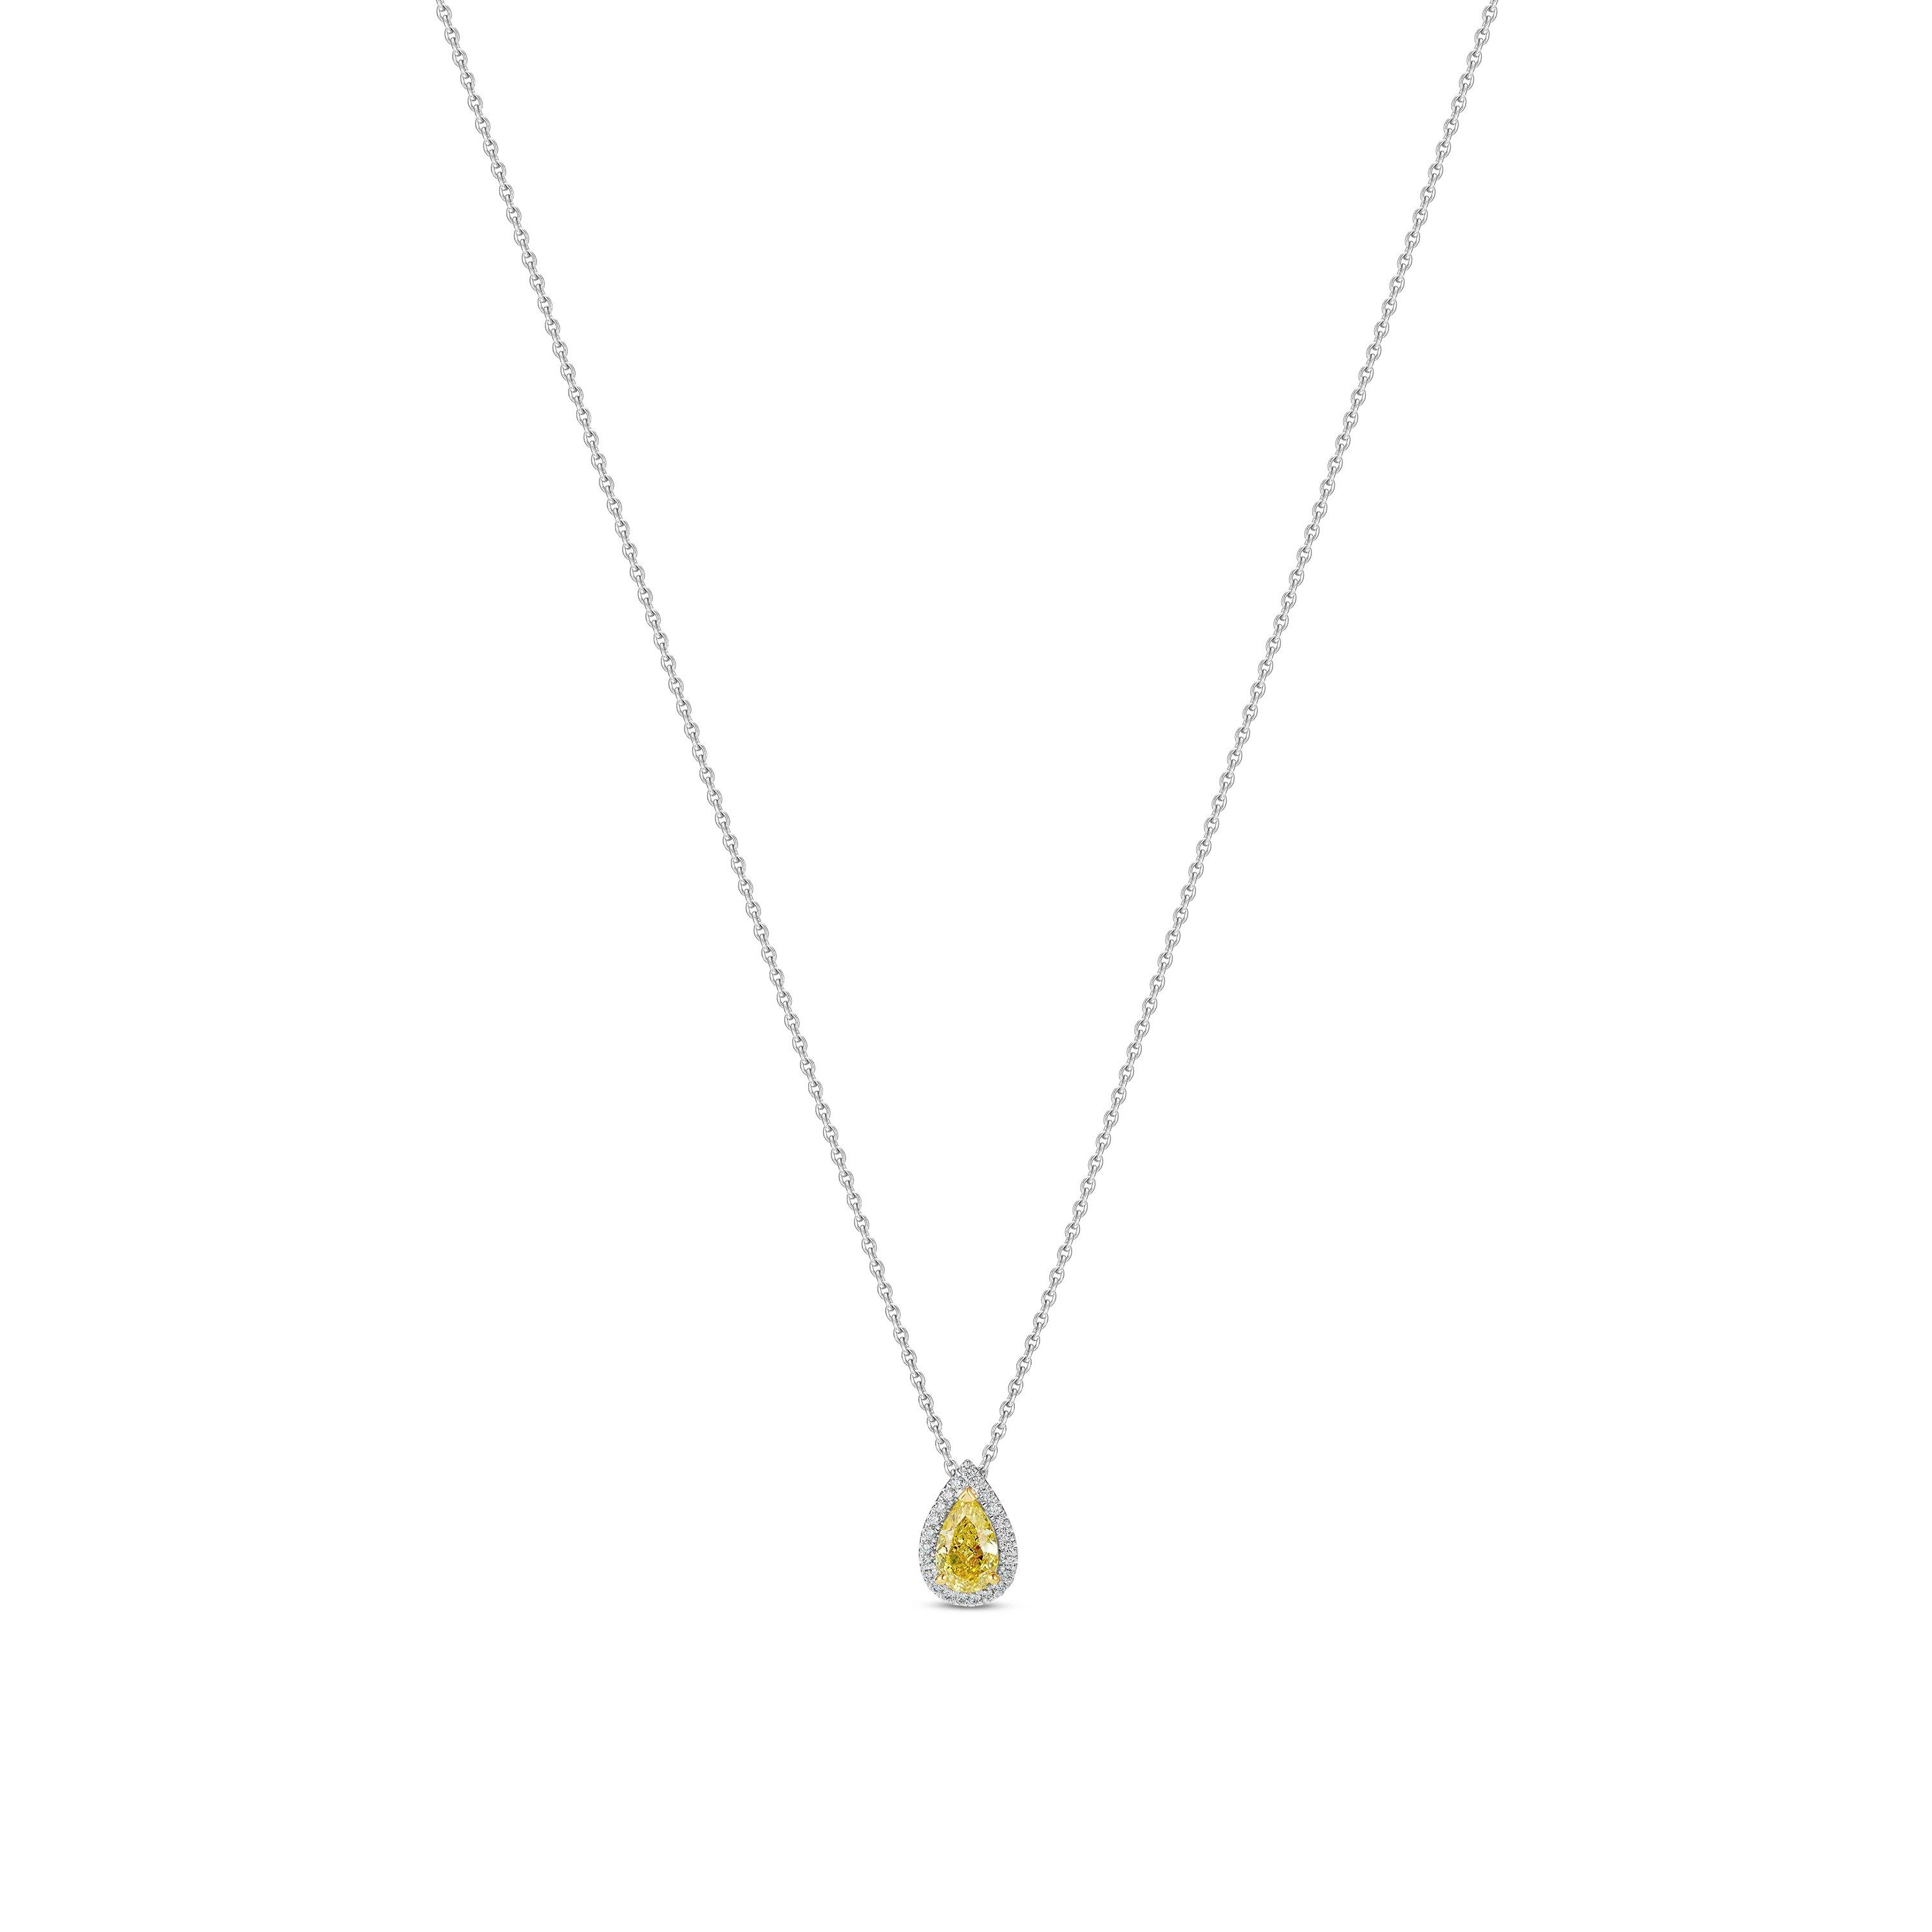 Aura fancy yellow pear-shaped diamond pendant